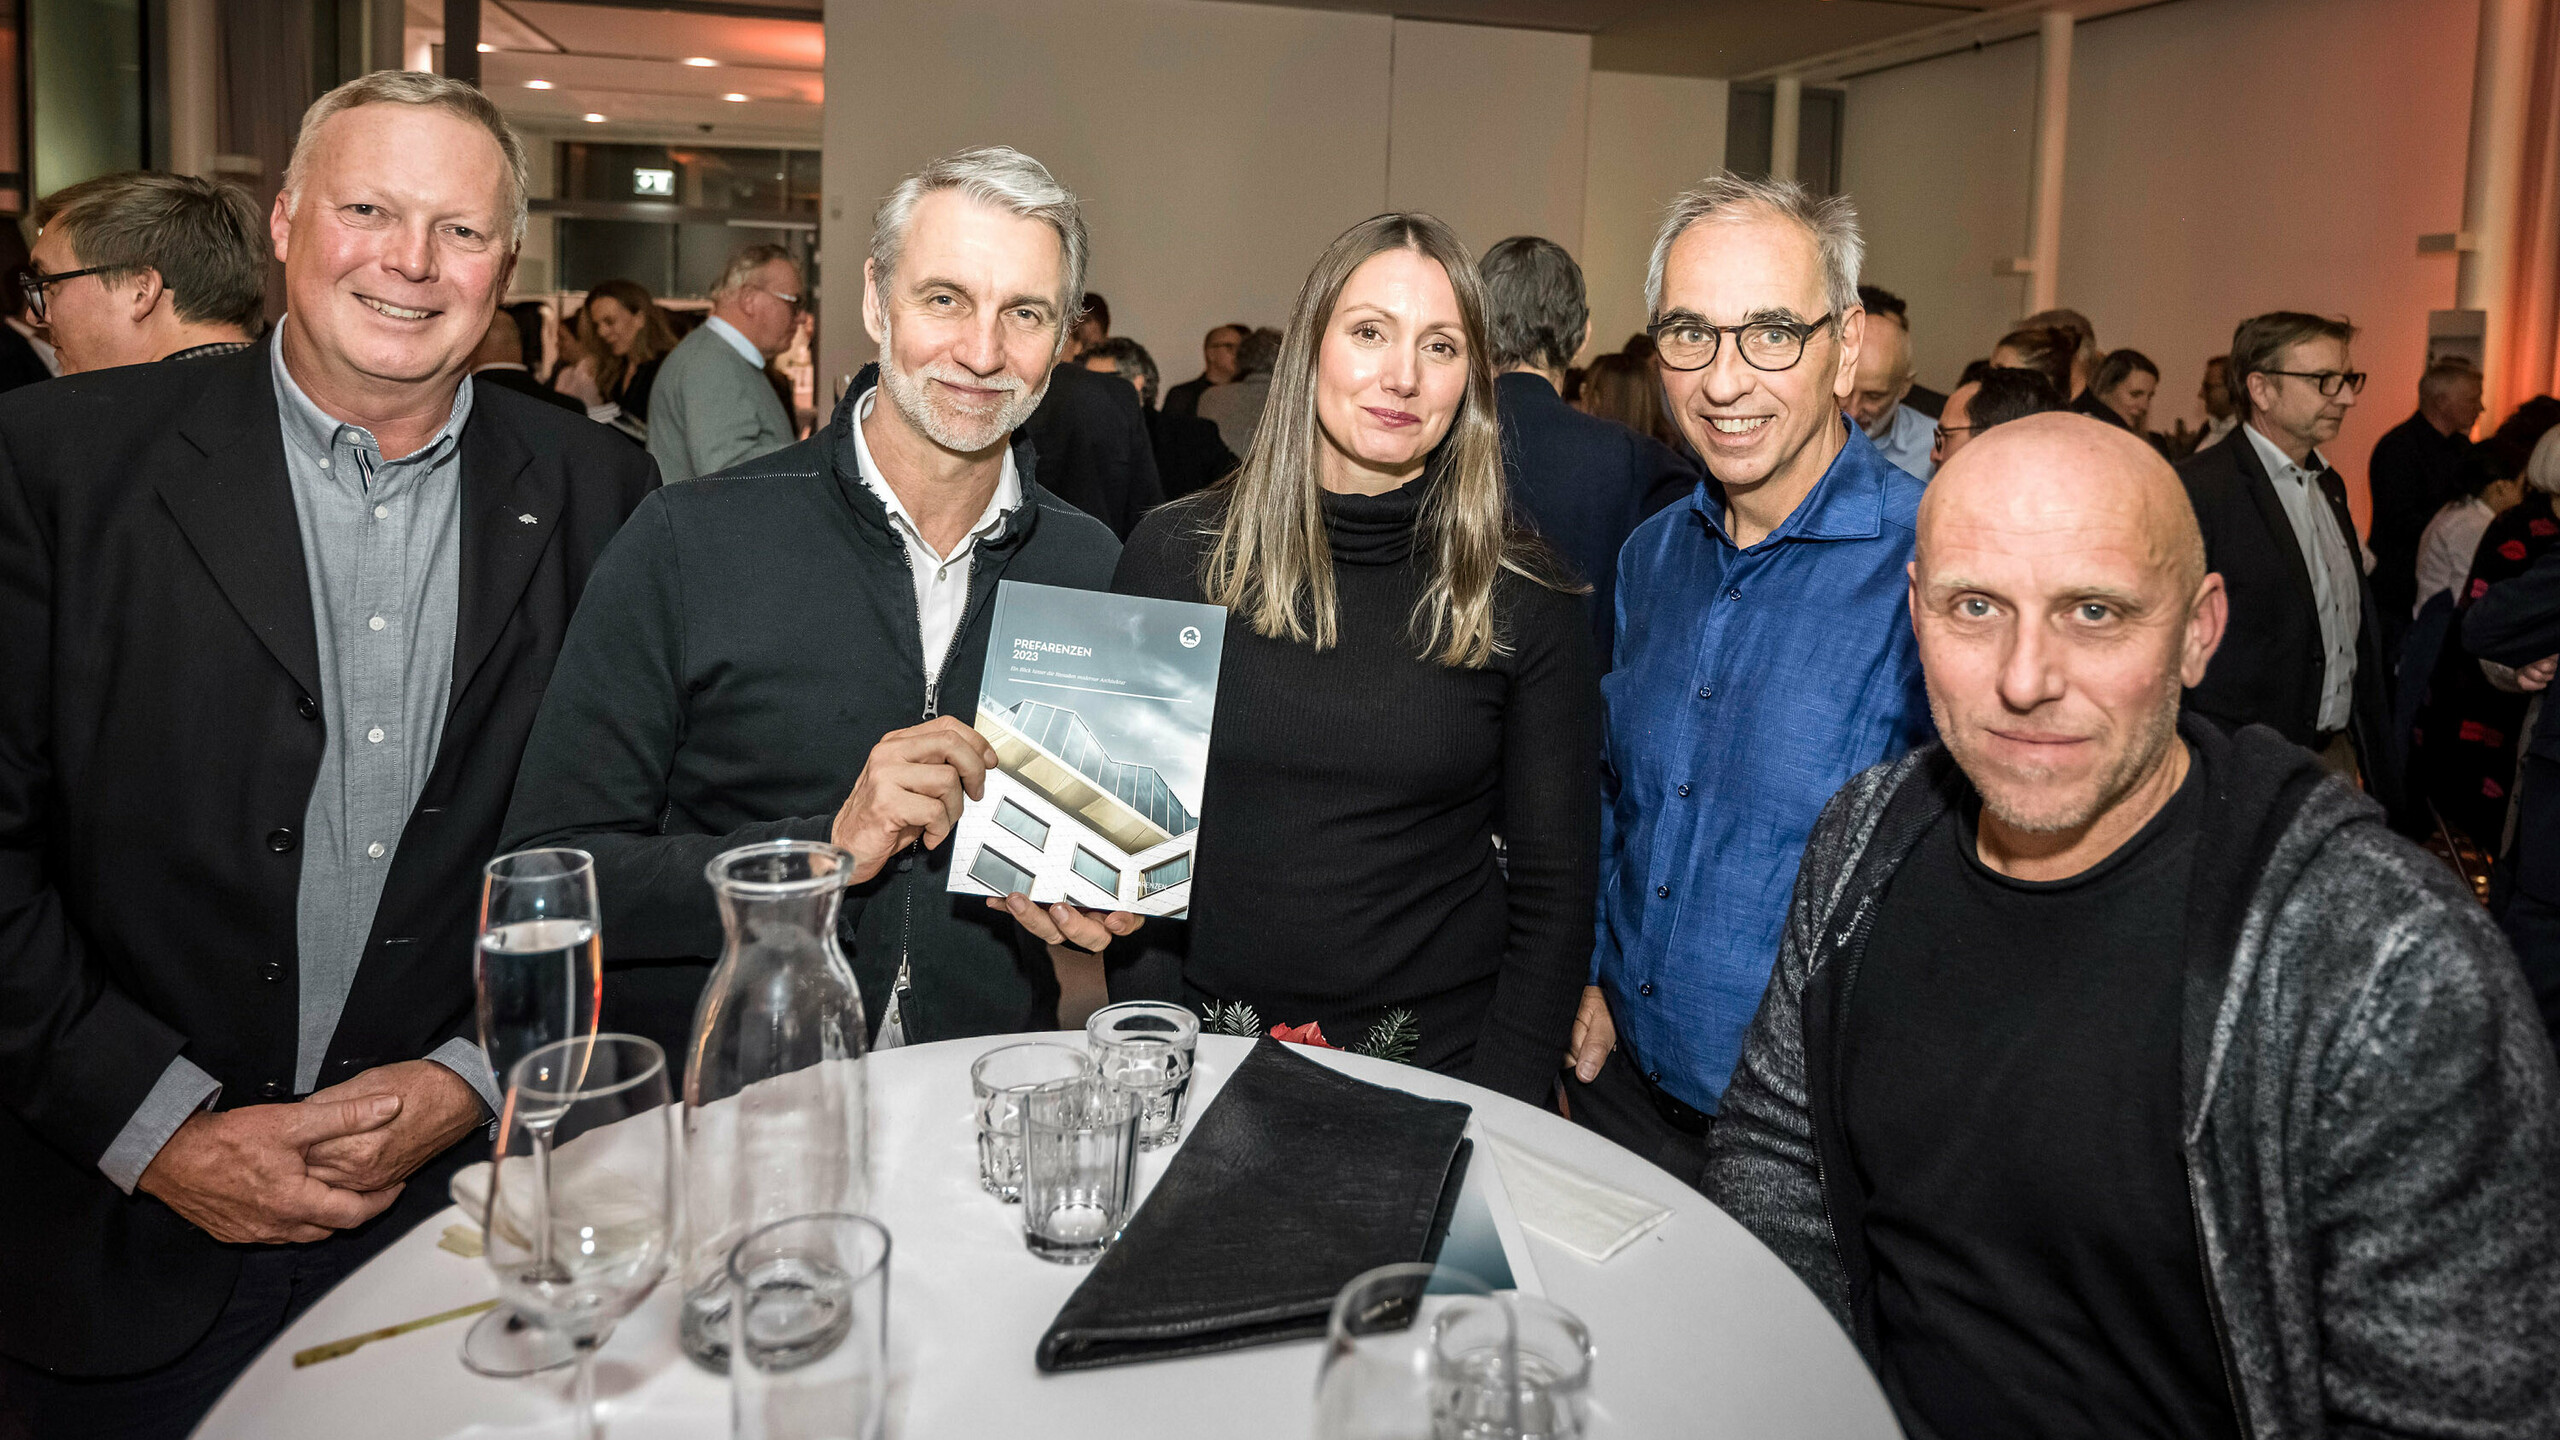 Gerald Krebs, architect Oliver Kupfner with the book in his hand, Anastasija Lesjak, Wolfgang Croce, Martin Lesjak.